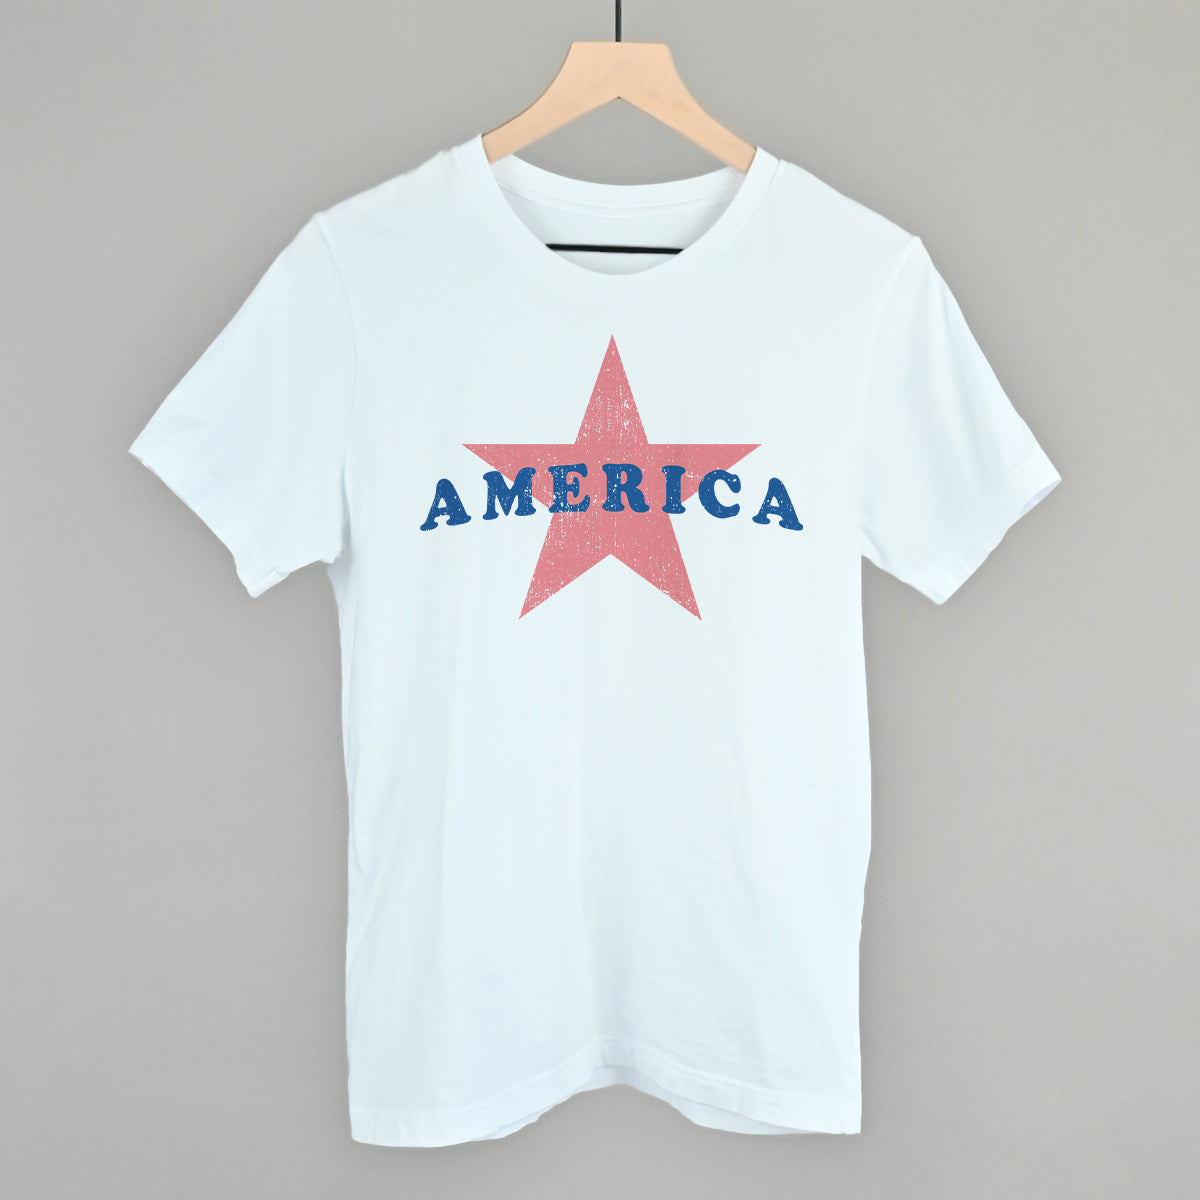 America Star Arc